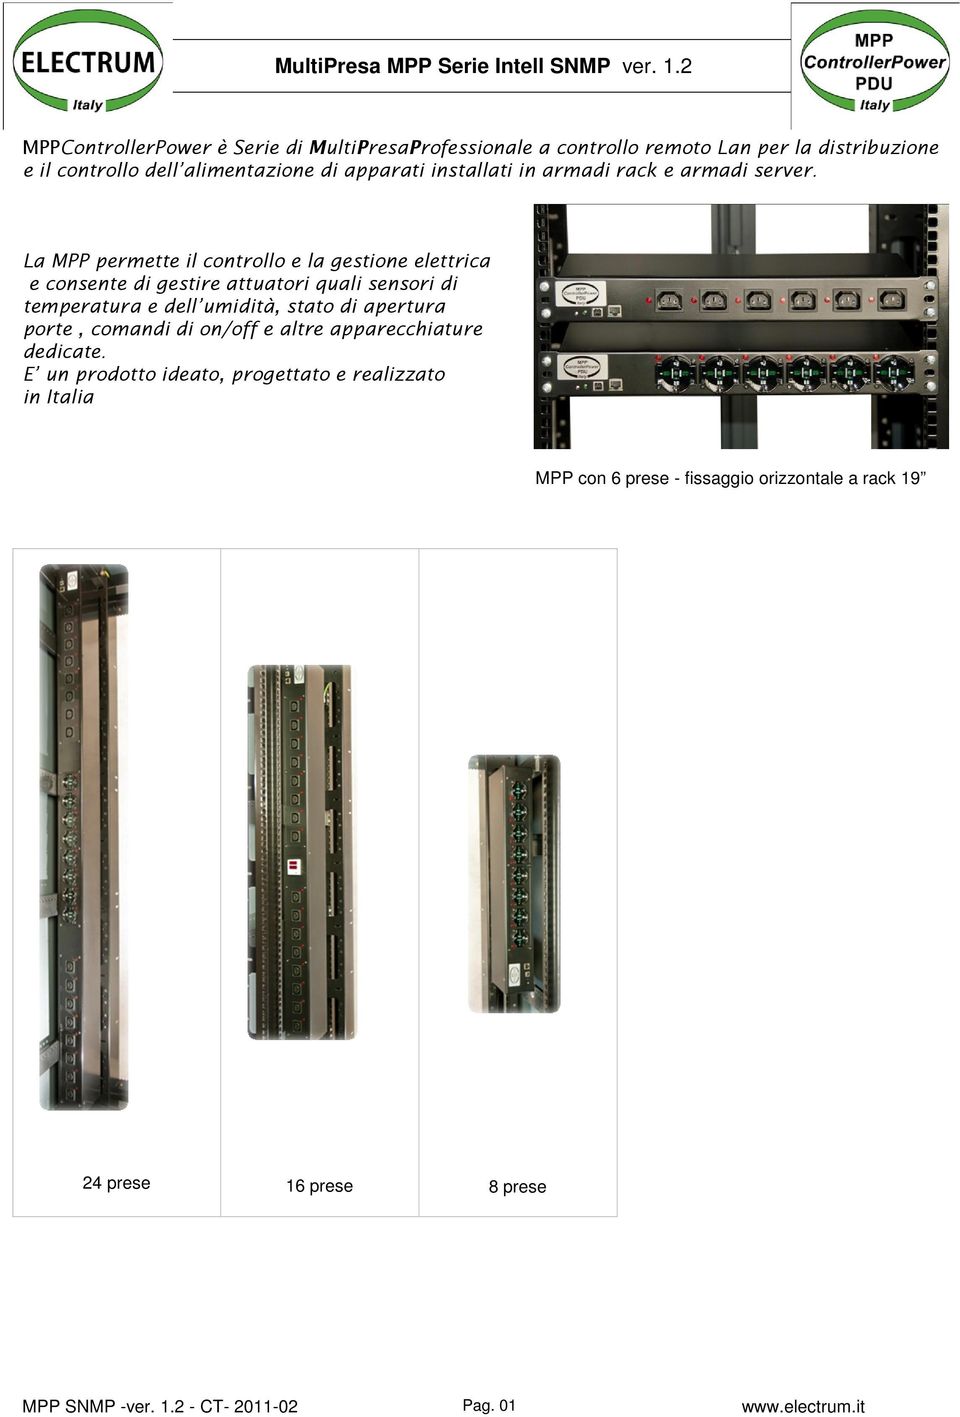 apparati installati in armadi rack e armadi server.